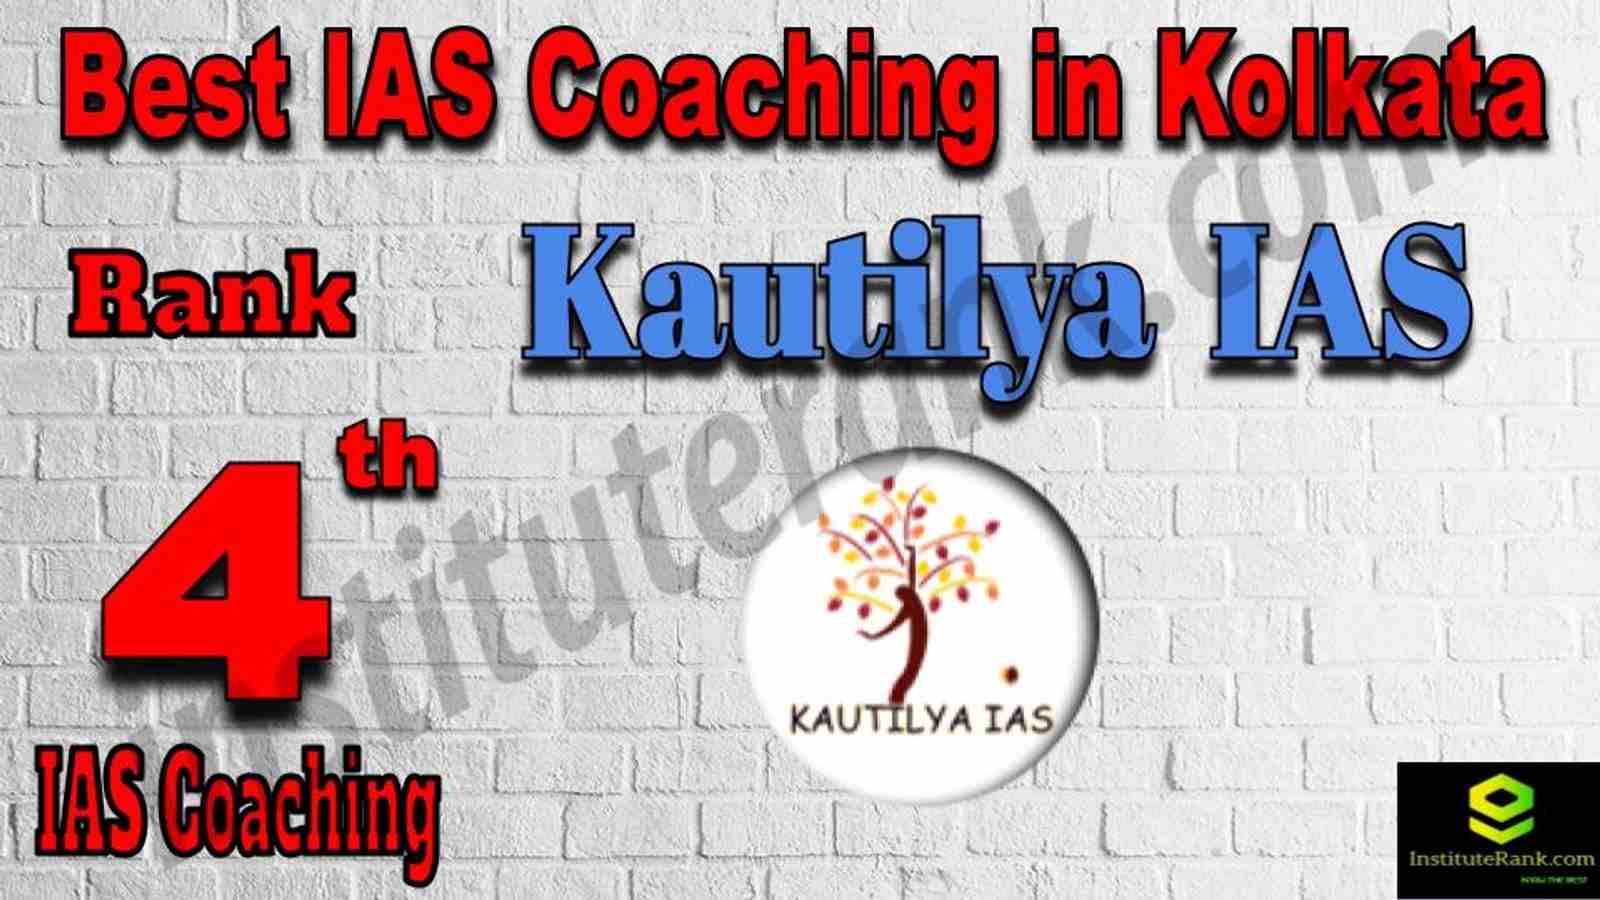 4th Best IAS Coaching in Kolkata